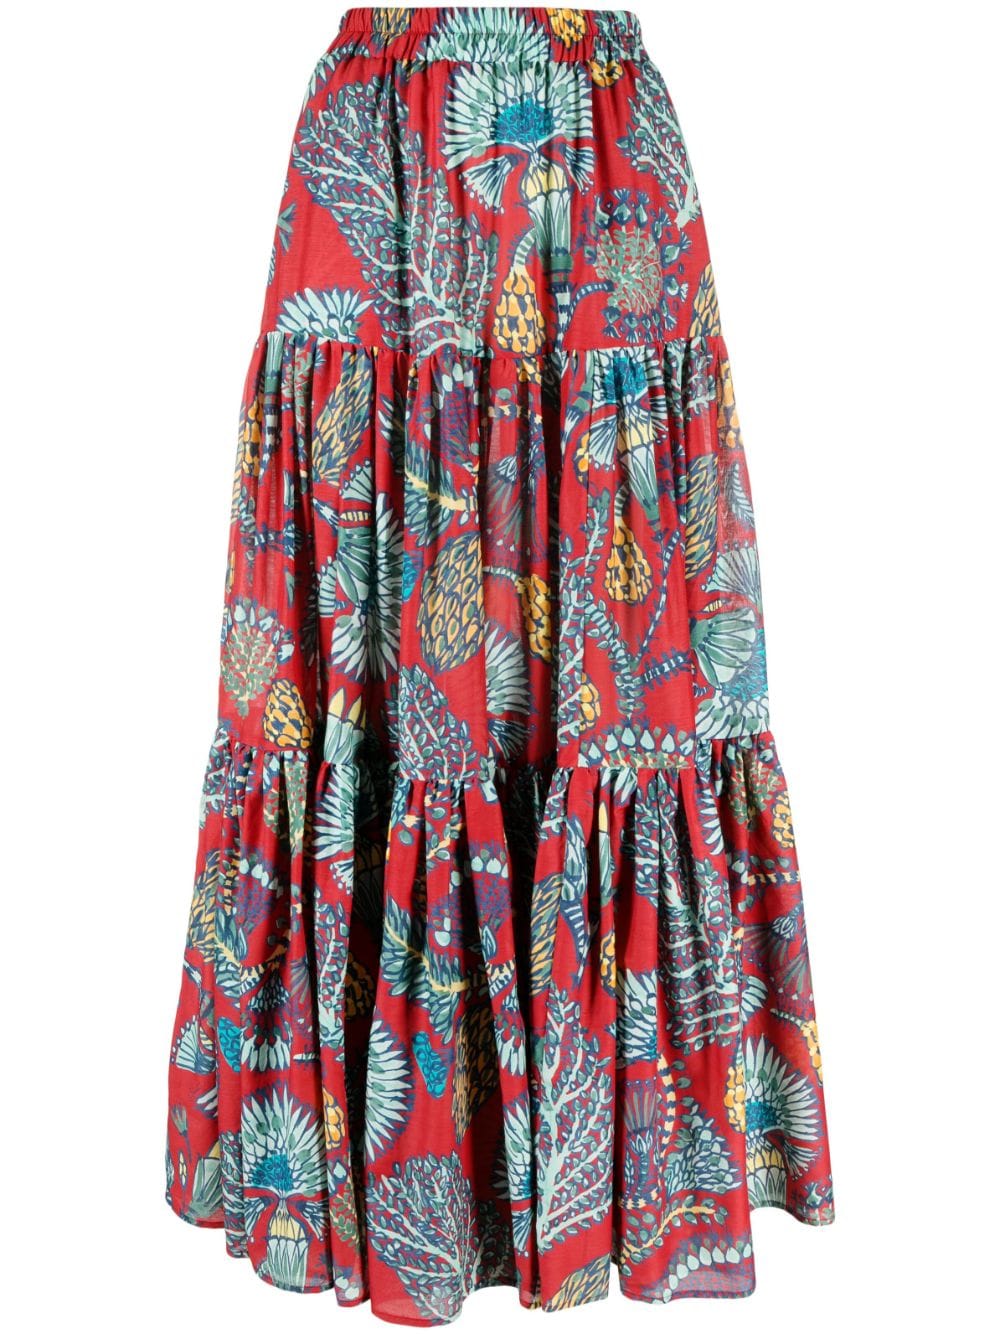 Big floral-print tiered skirt